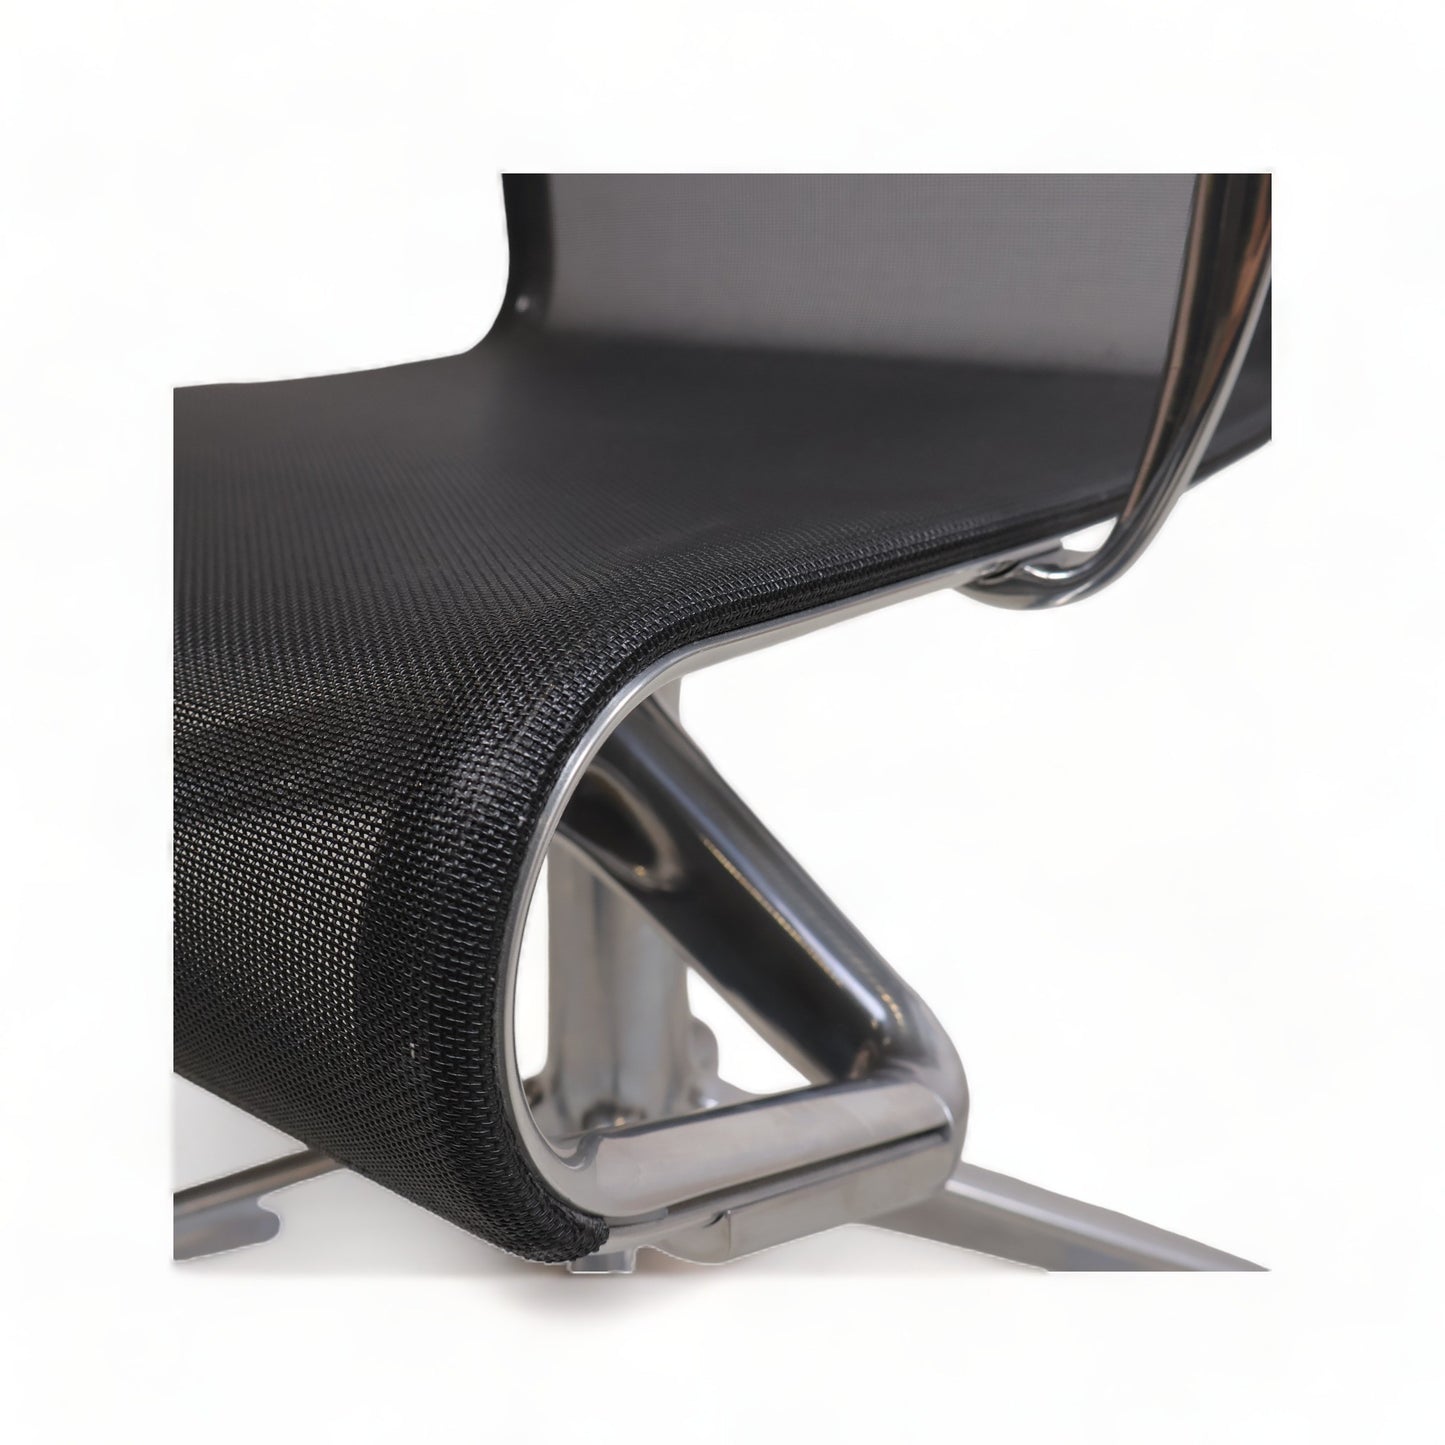 Mørk grå Alias Meetingframe stol i polert aluminium